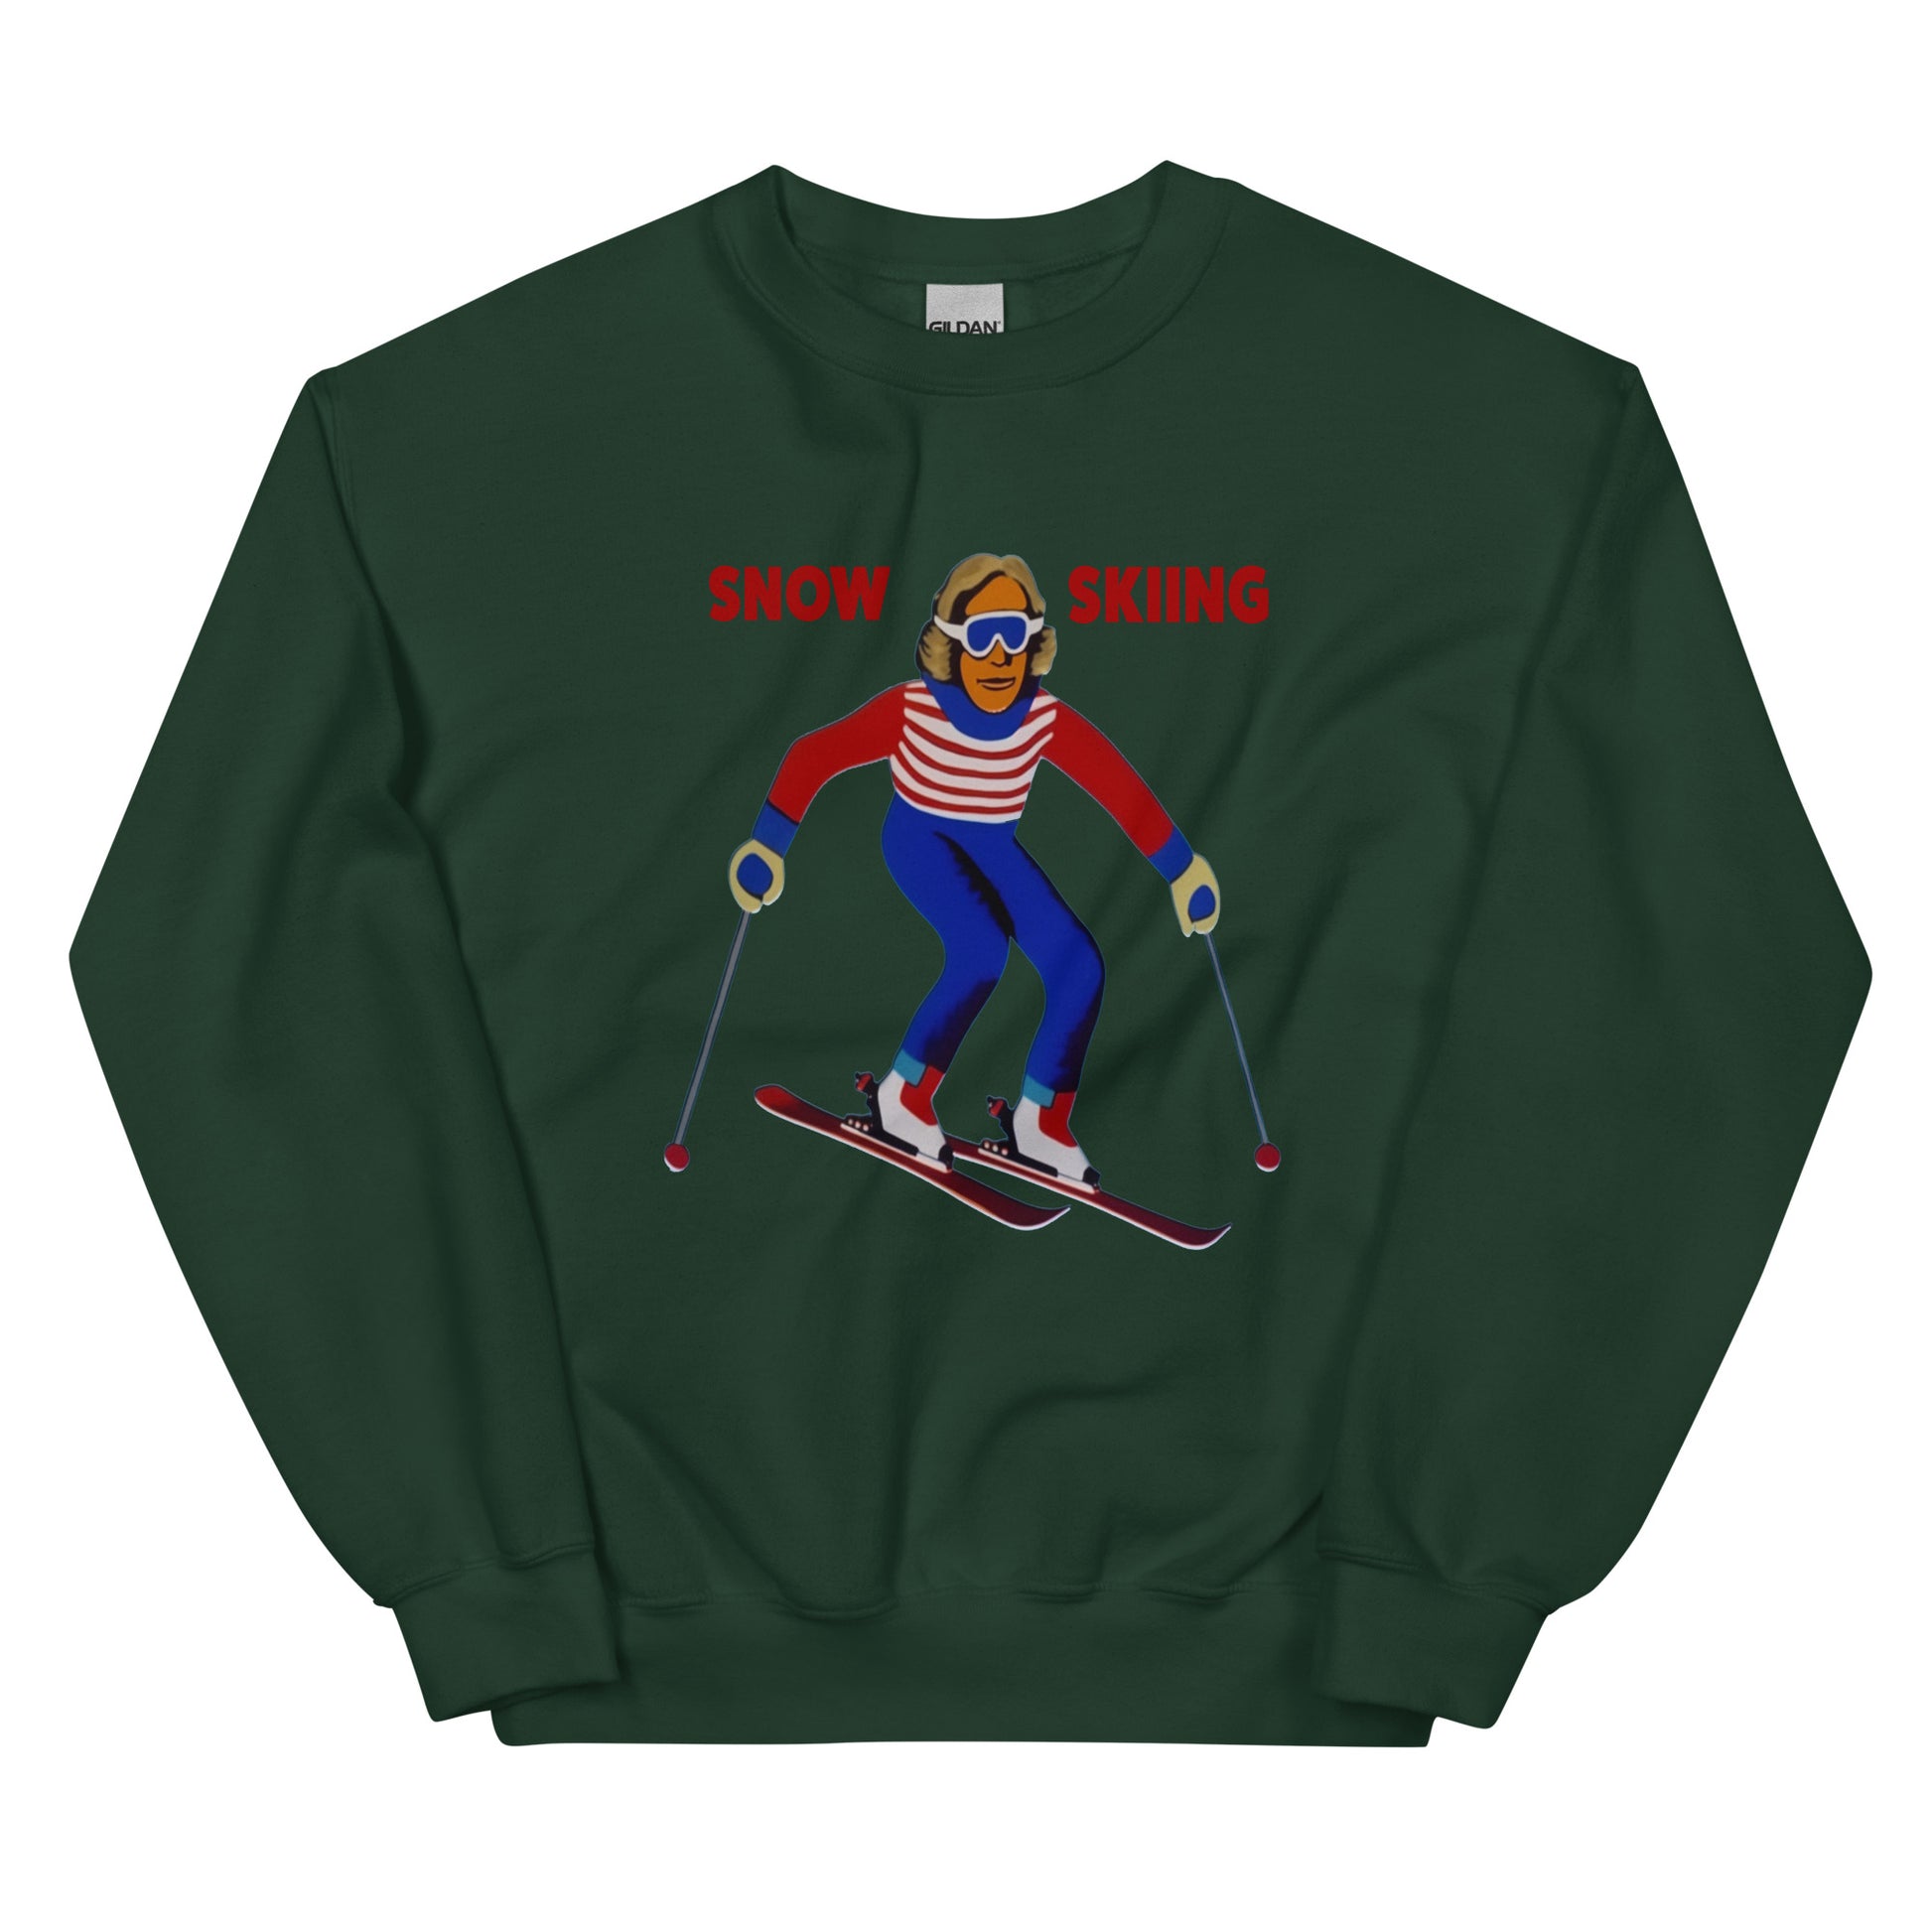 Snow skiing printed crewneck sweatshirt by Whistler Shirts